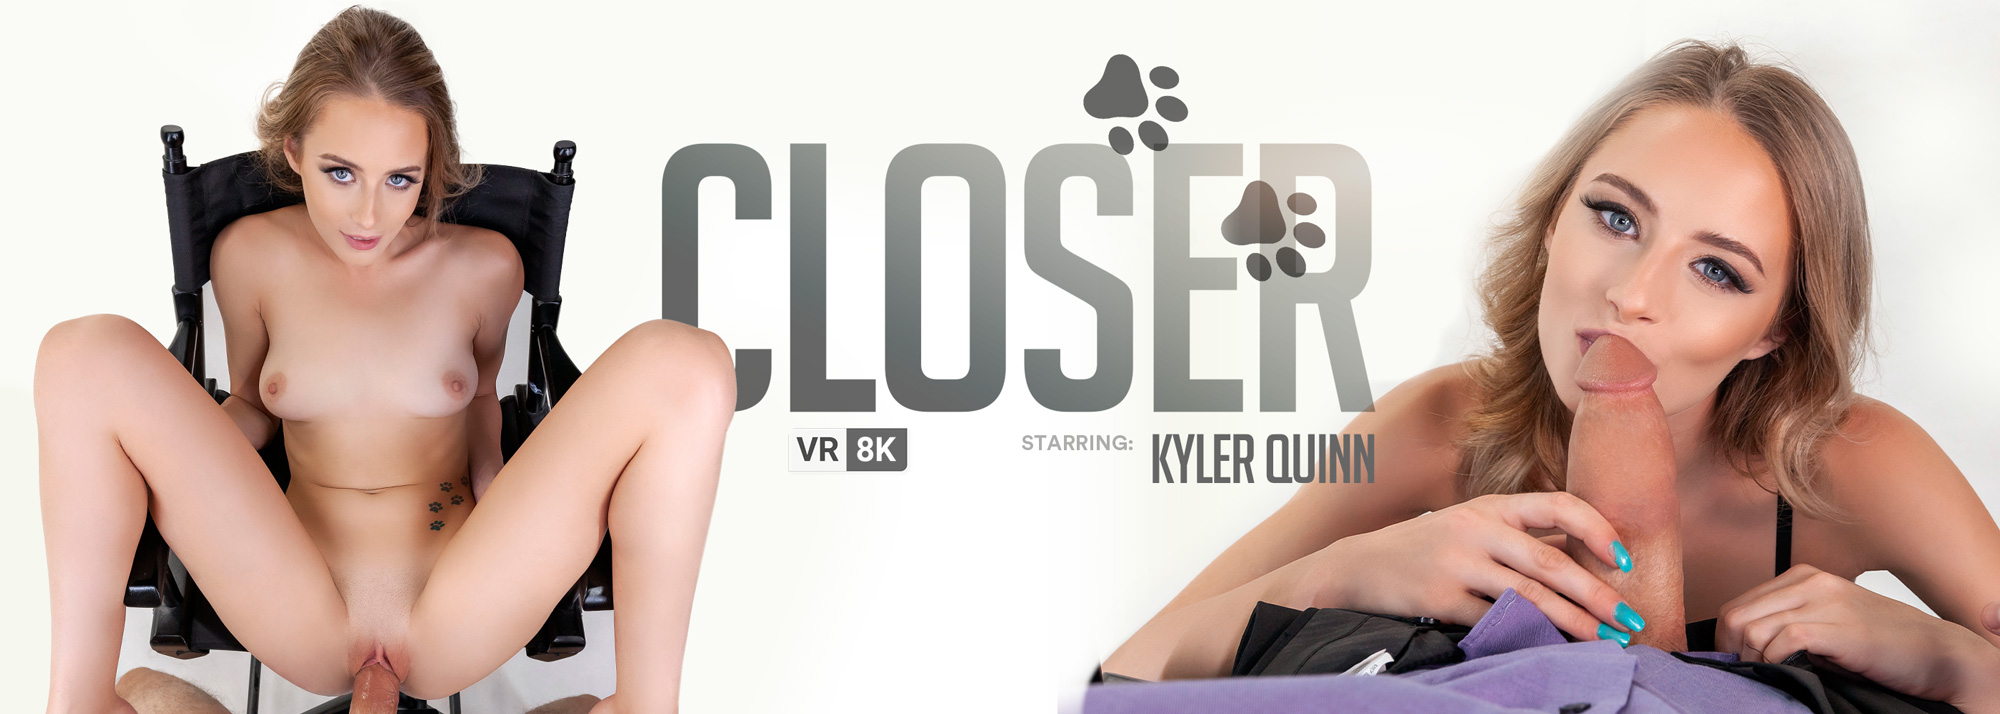 Closer - VR Porn Video, Starring: Kyler Quinn